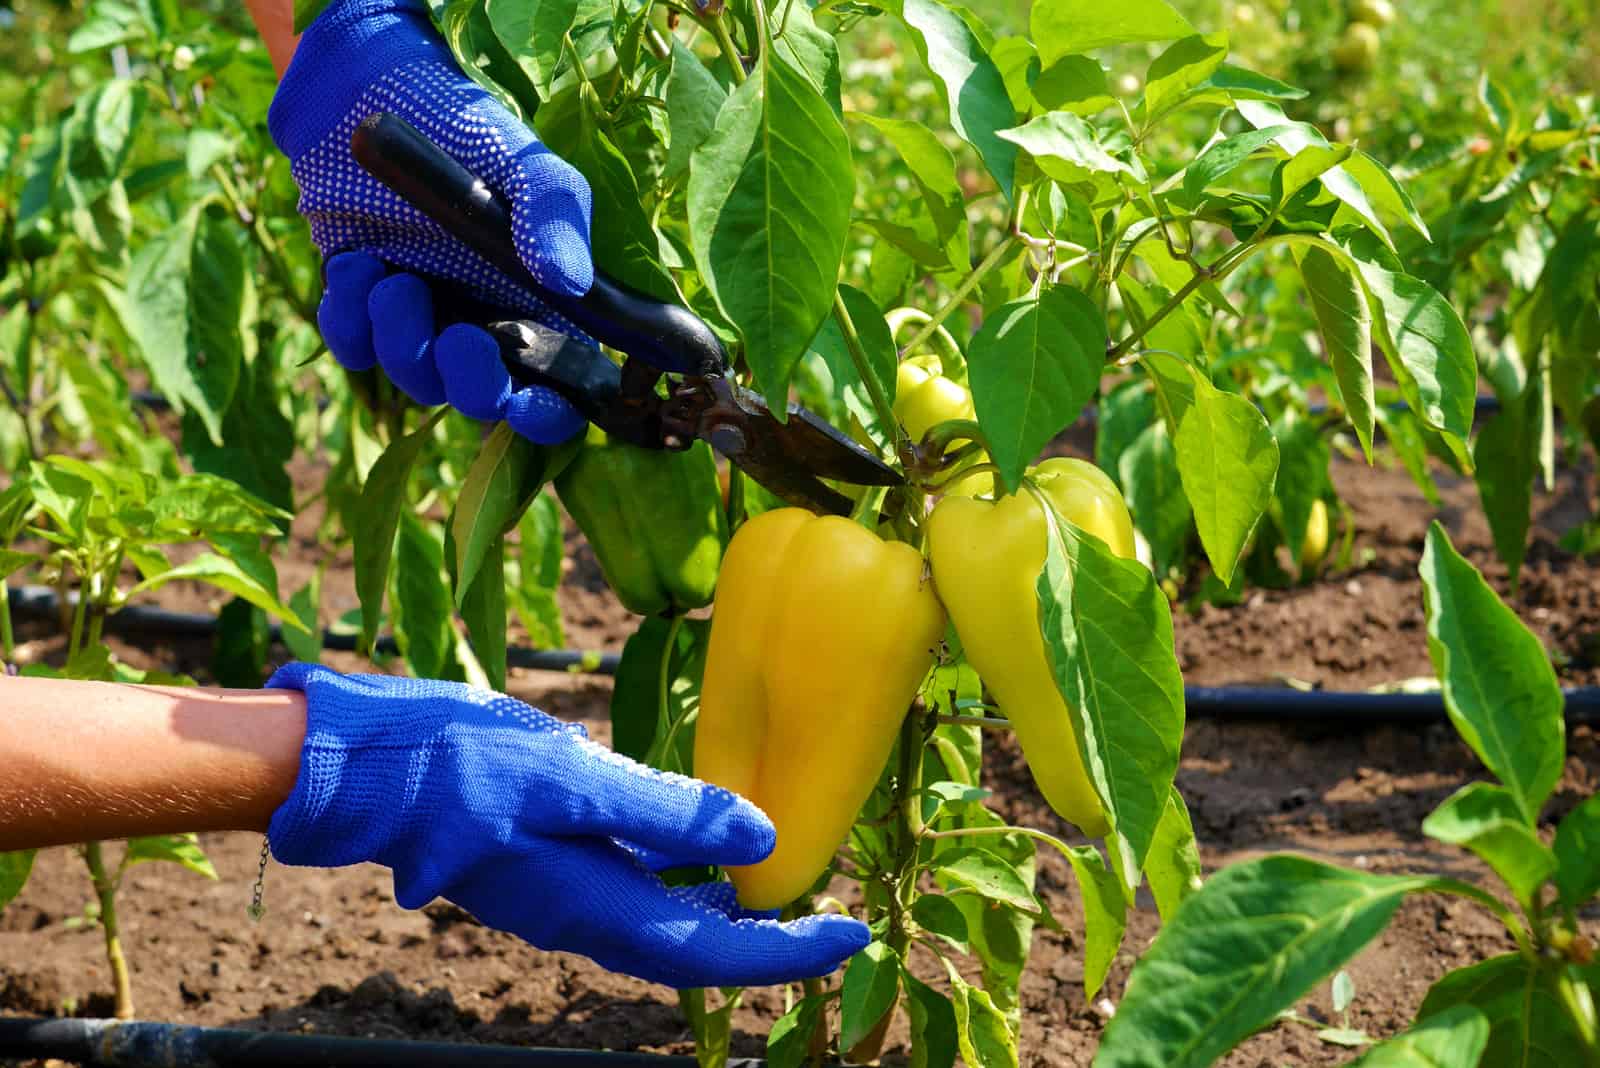 gardener harvesting peppers in the garden